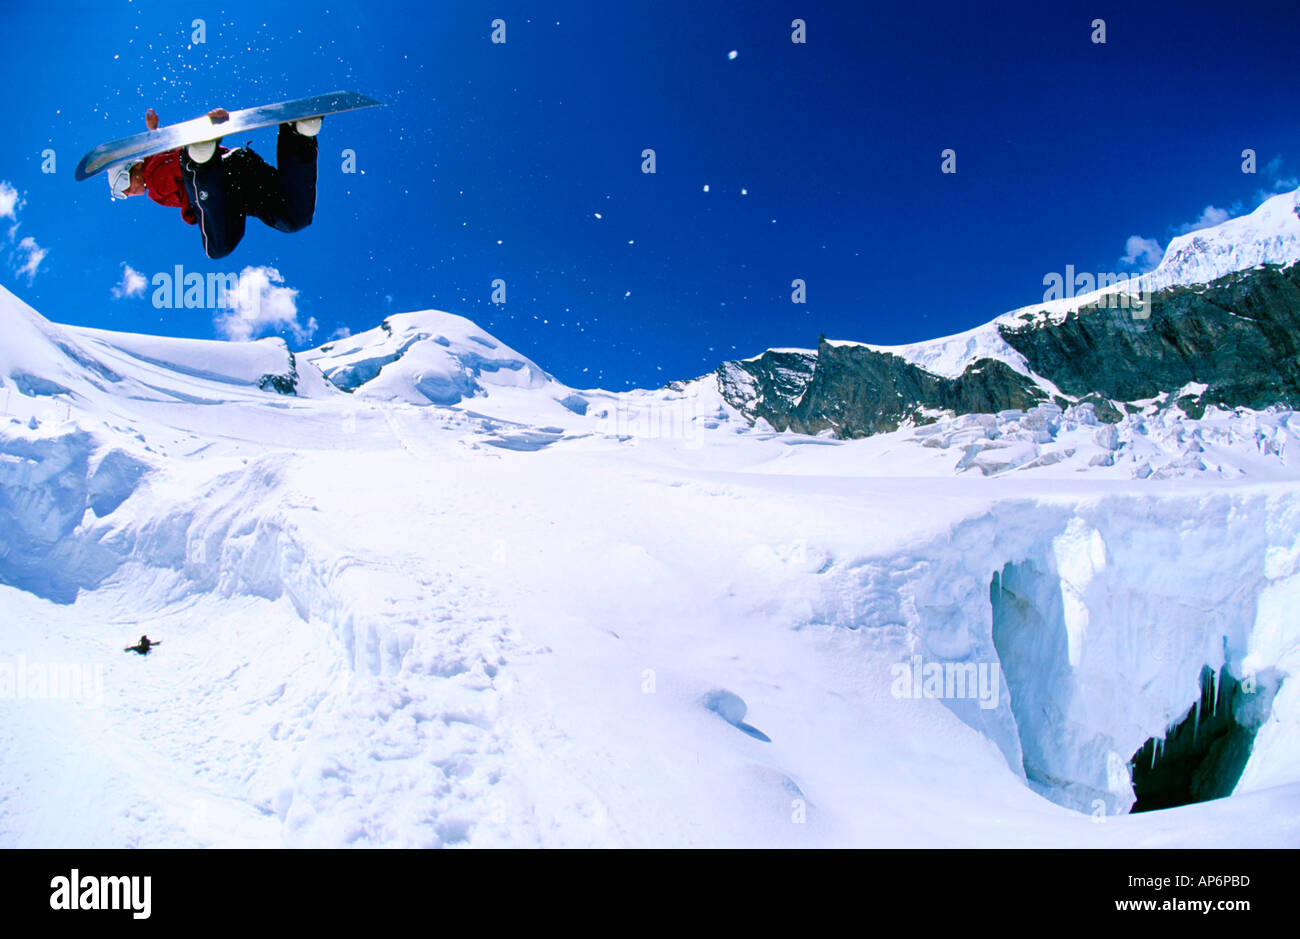 MARTIN RUTZ SNOWBOARDING IN SAAS FEE SWITZERLAND Stock Photo